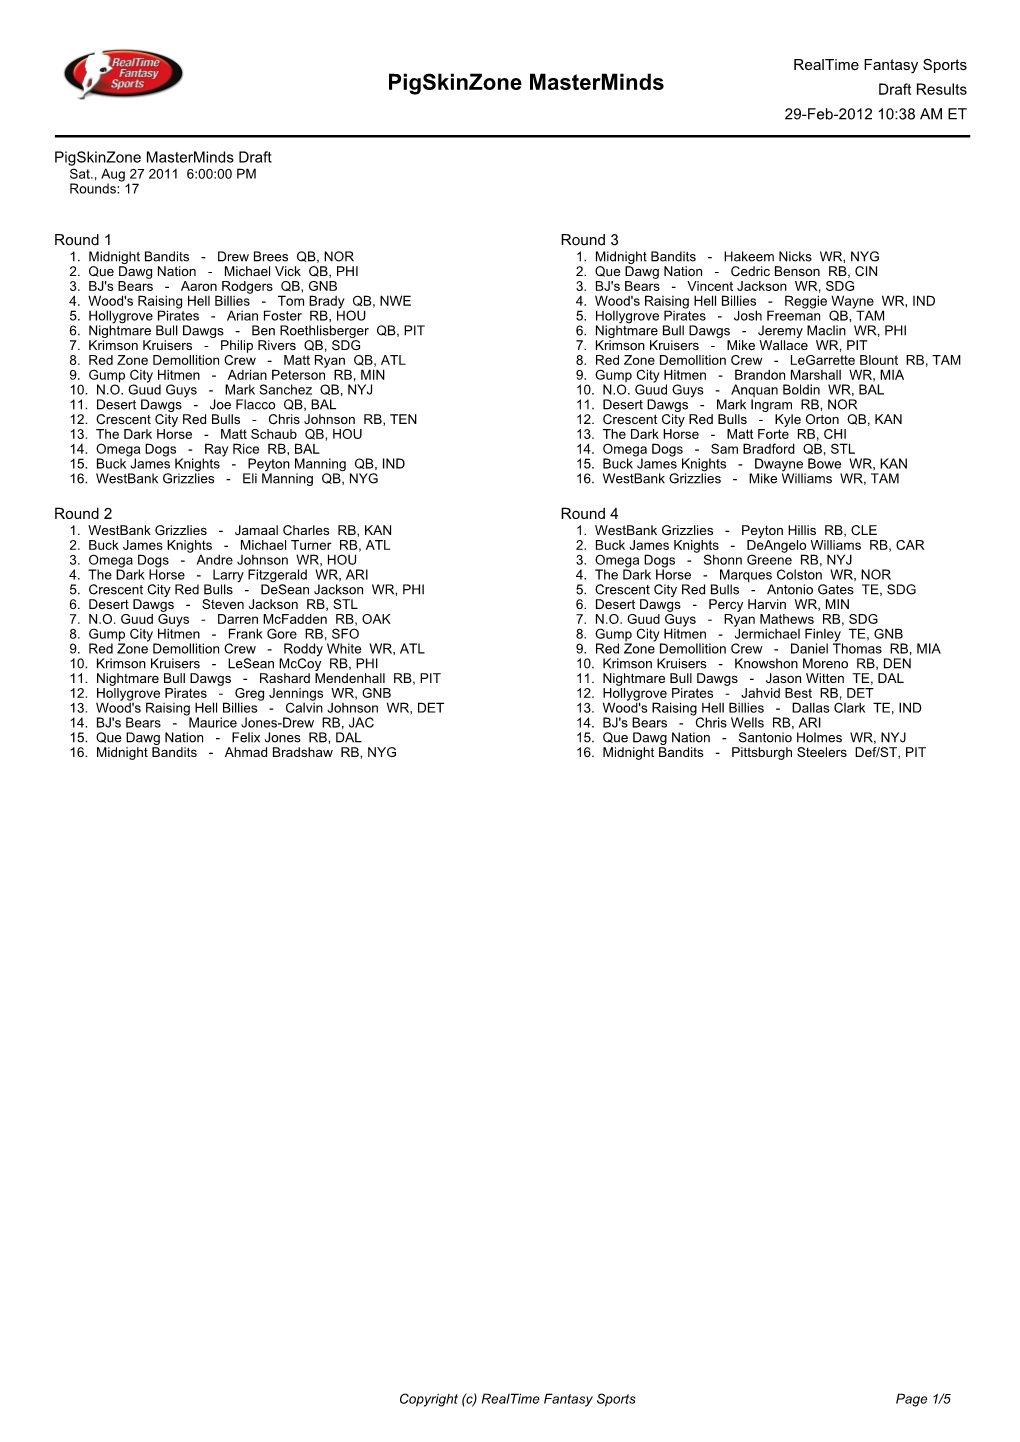 Pigskinzone Masterminds Draft Results 29-Feb-2012 10:38 AM ET